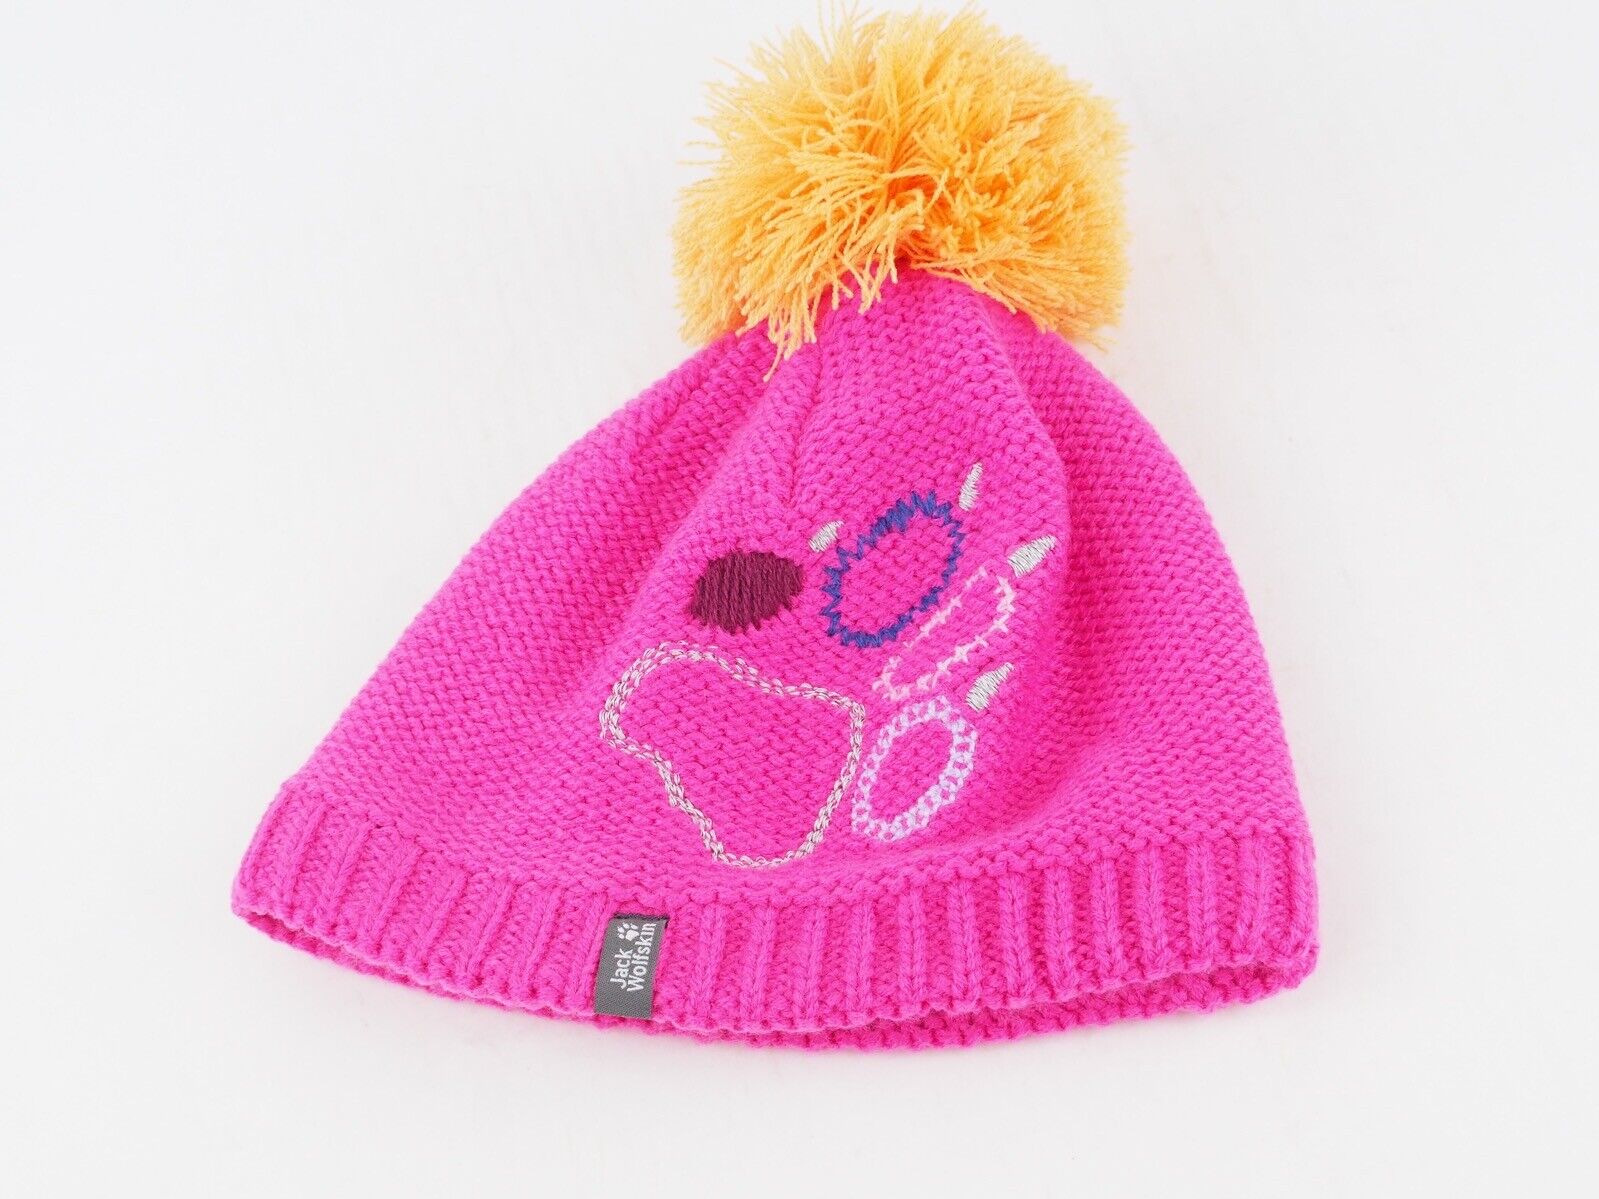 Girls Jack Wolfskin Paw Print Knit Cap Pink Warm Winter Hat With A Pom Pom - London Top Style